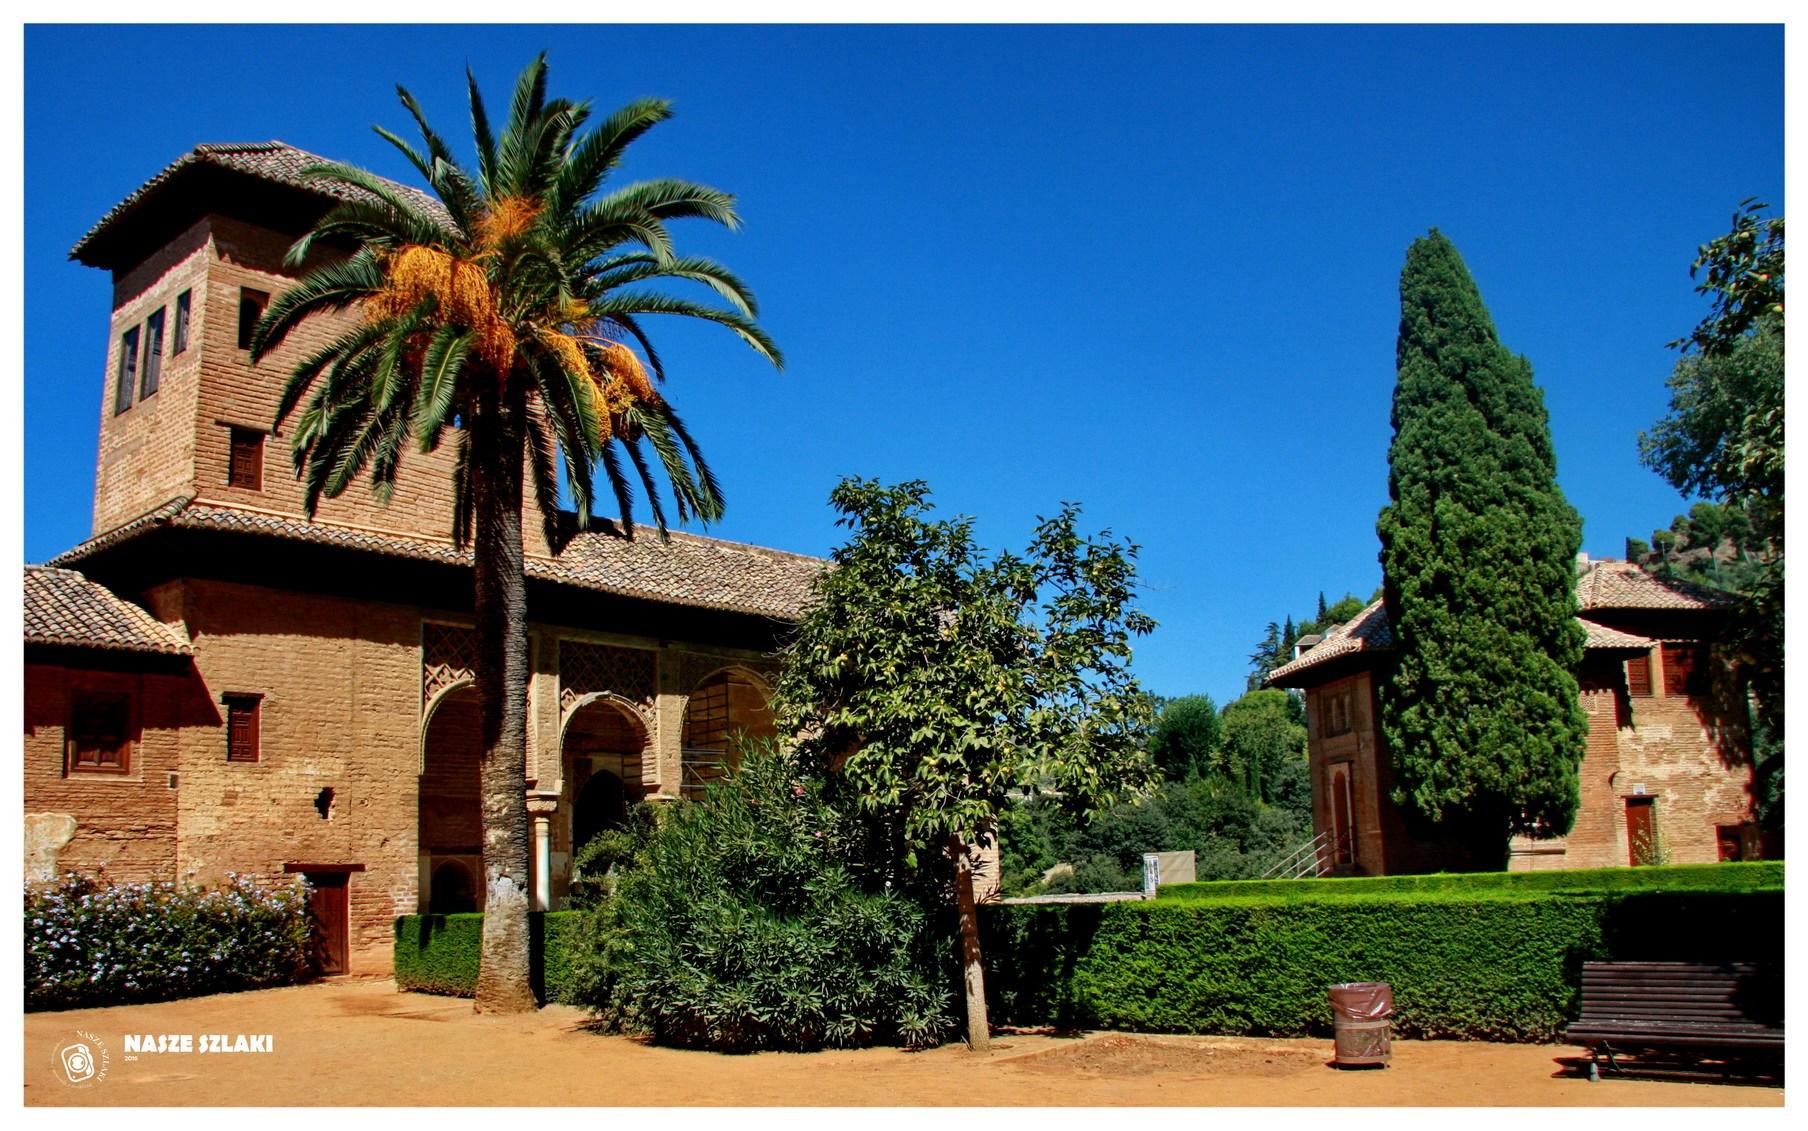 Hiszpania - Twierdza Alhambra w Andaluzji